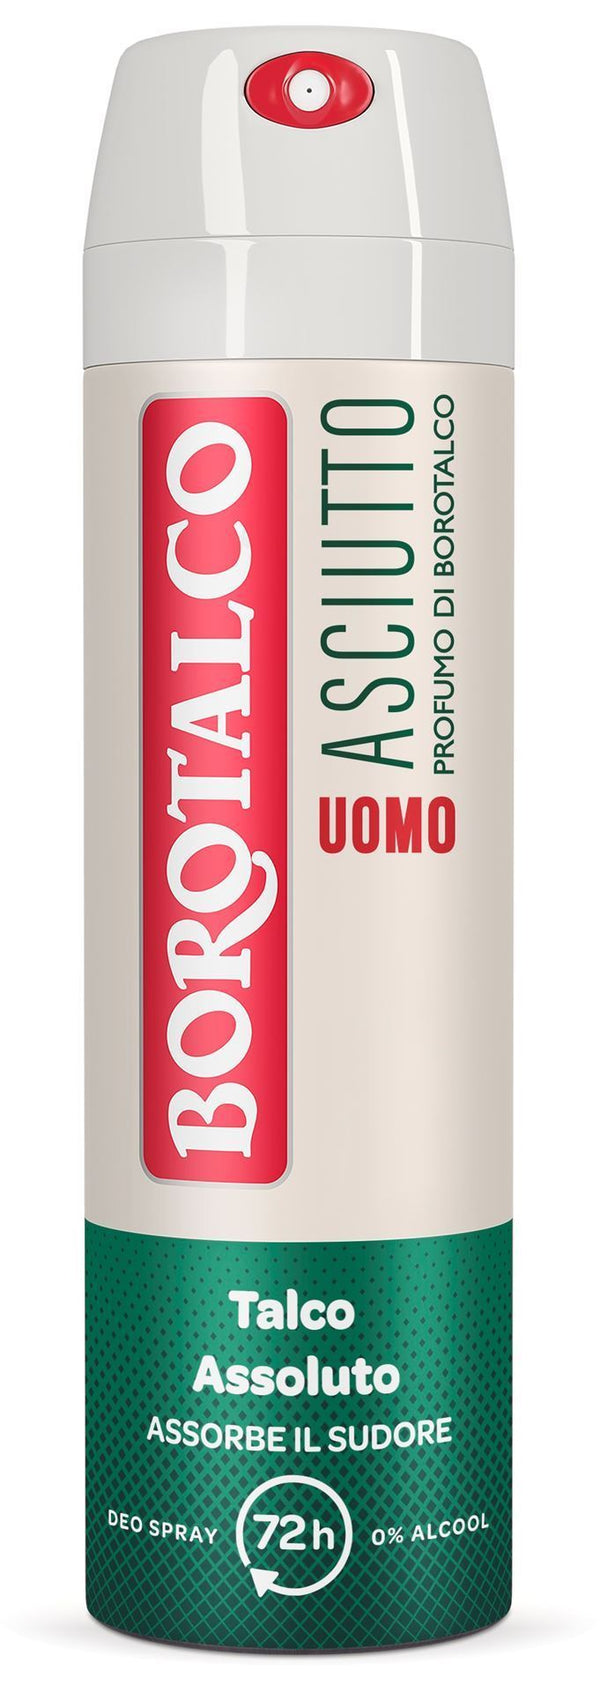 Borotalco Deodorant Asciutto DRY Spray For Men 150 ml